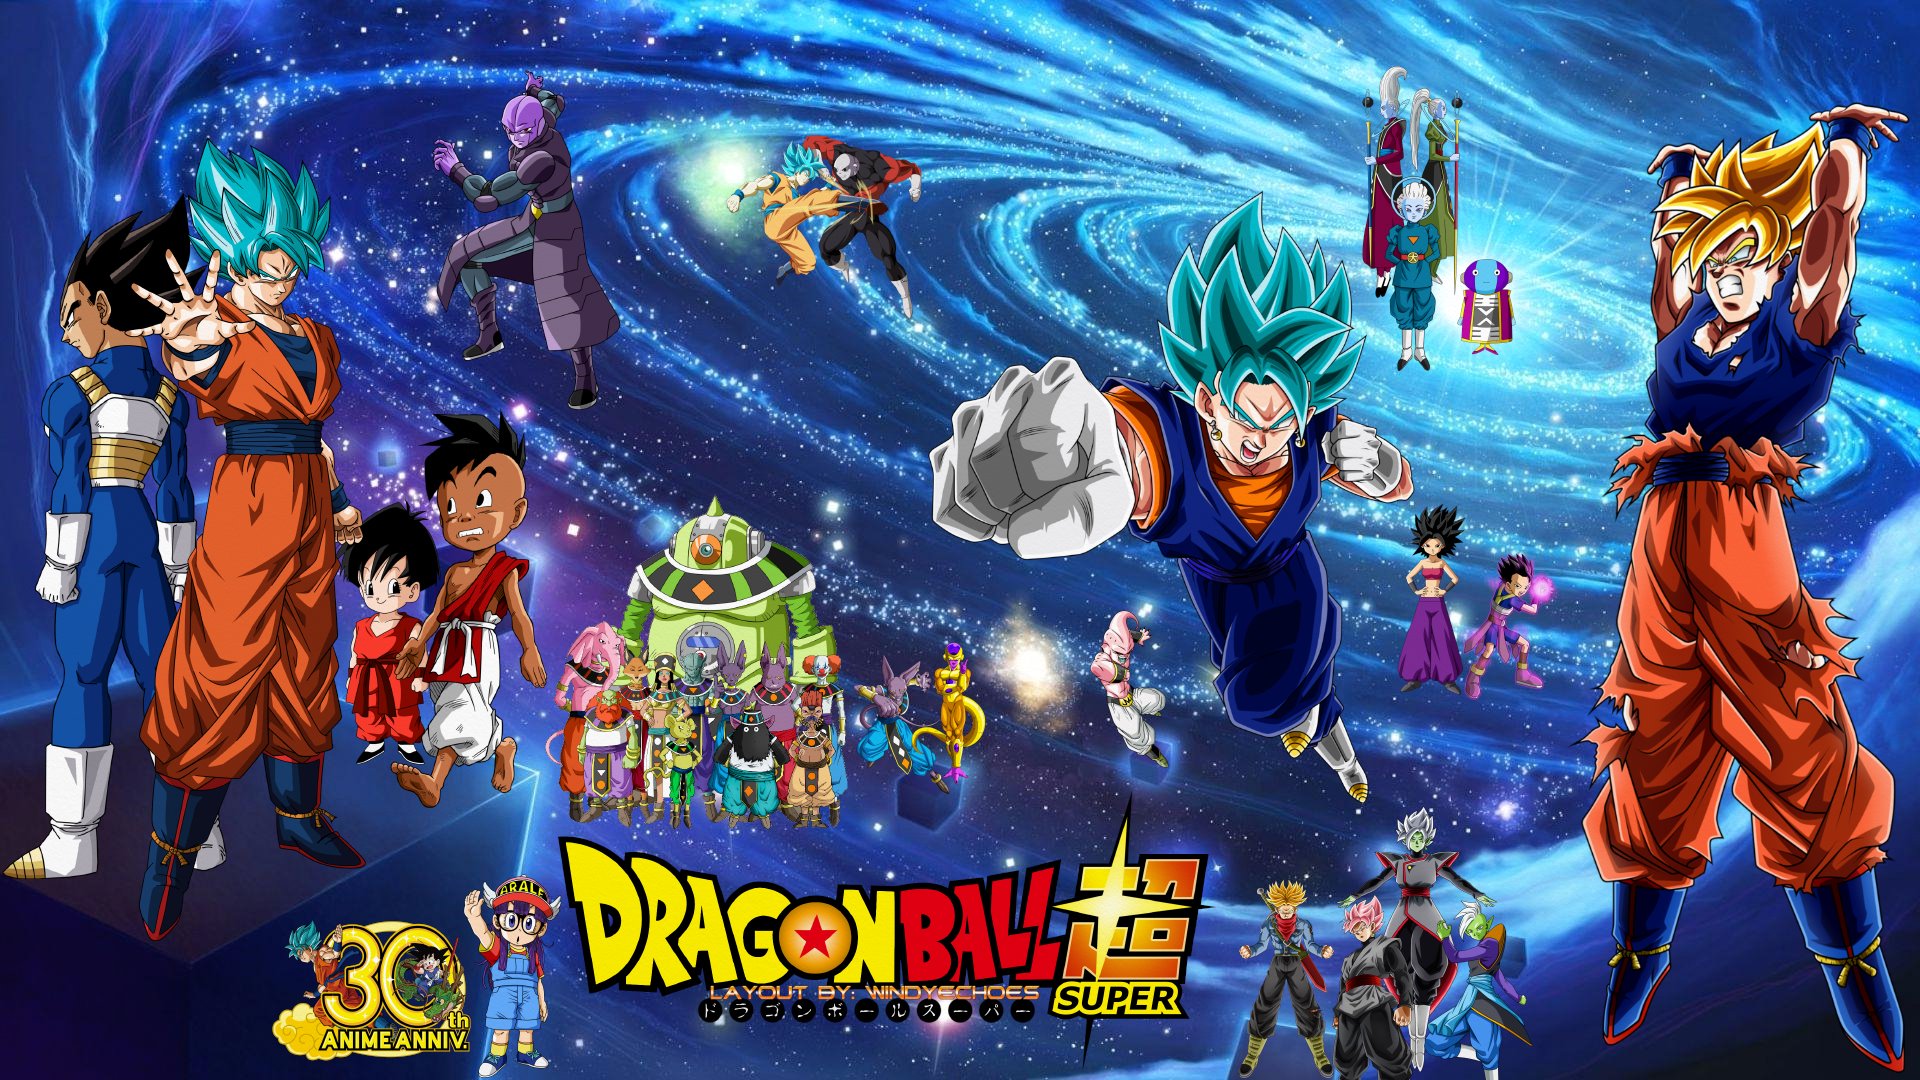 Dragon Ball Super - Torneio do Poder by ShinigamiDesign on DeviantArt